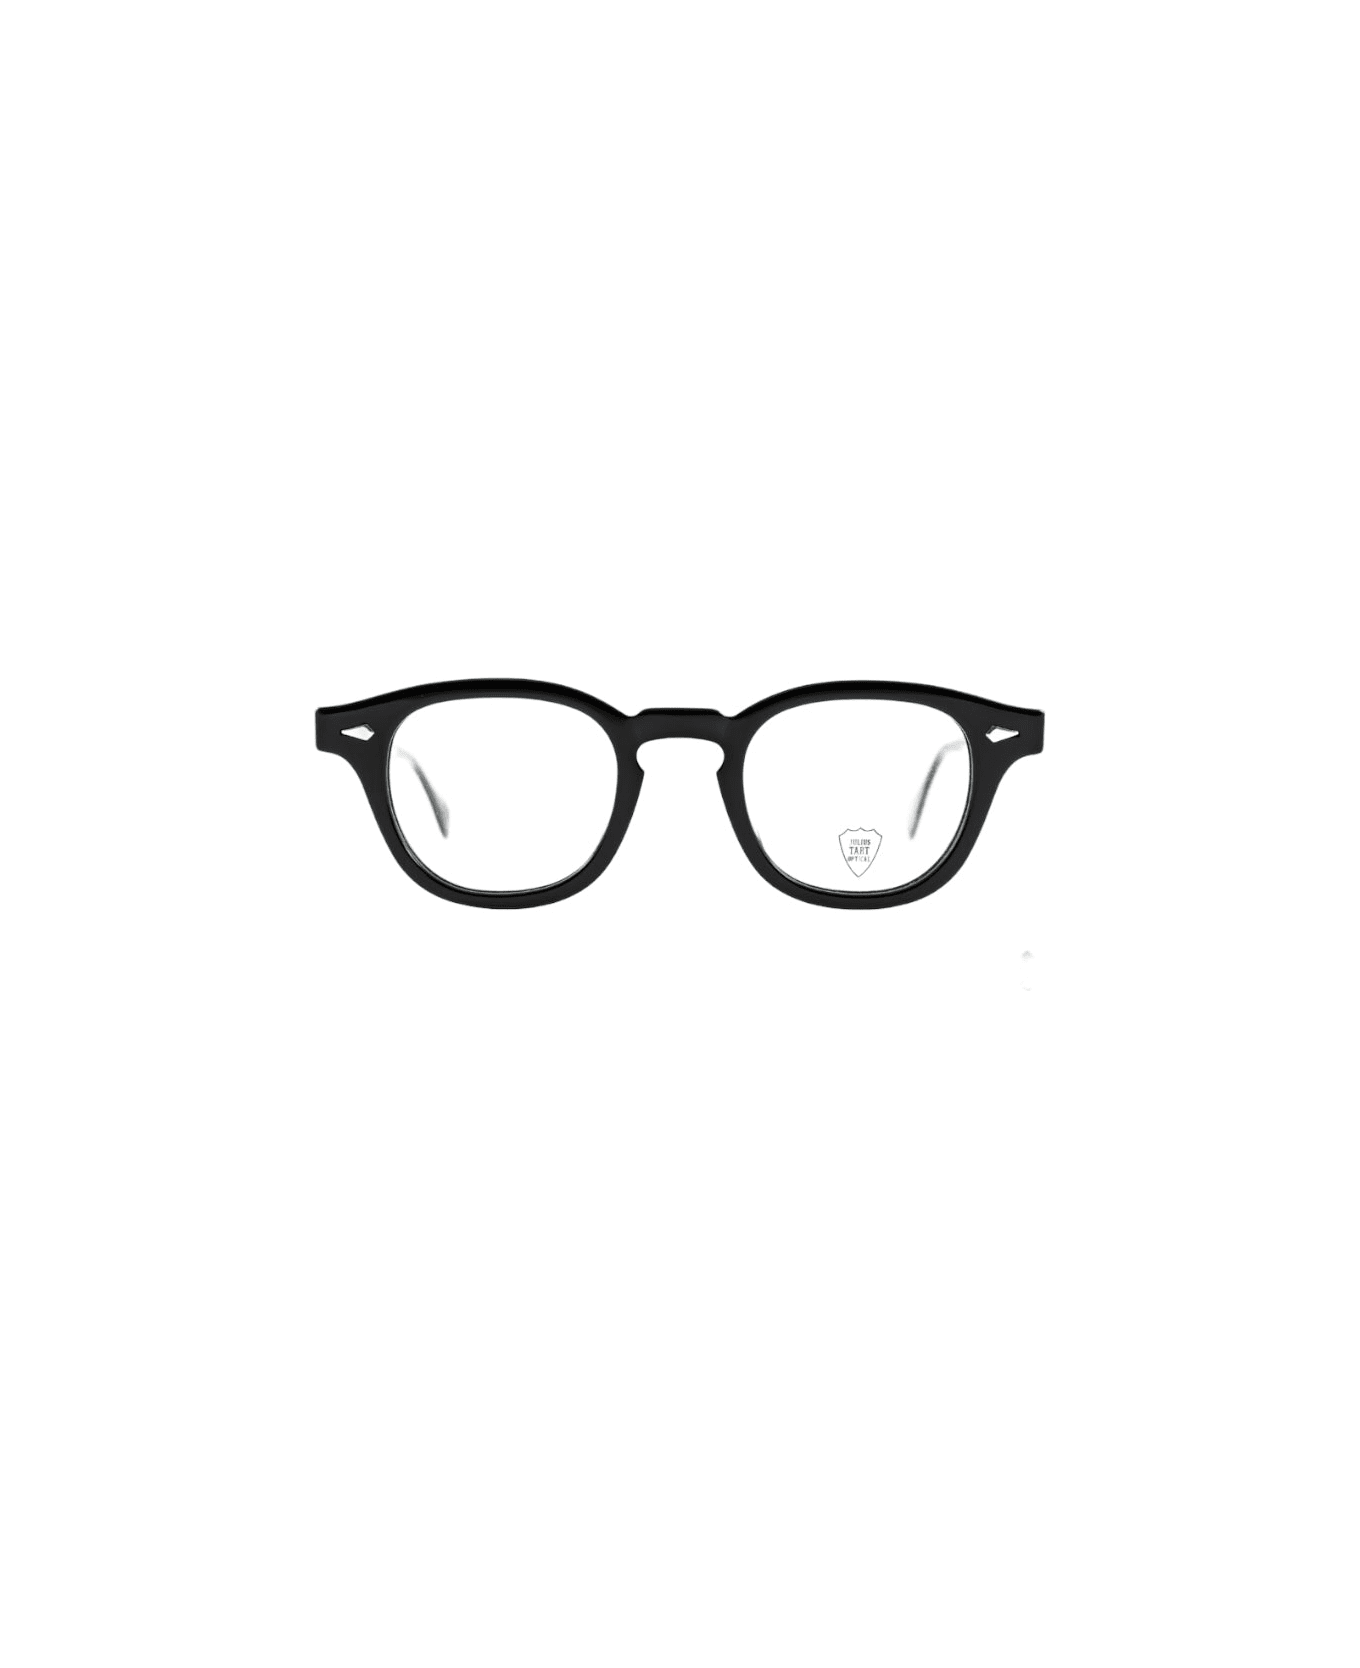 Ar Glasses